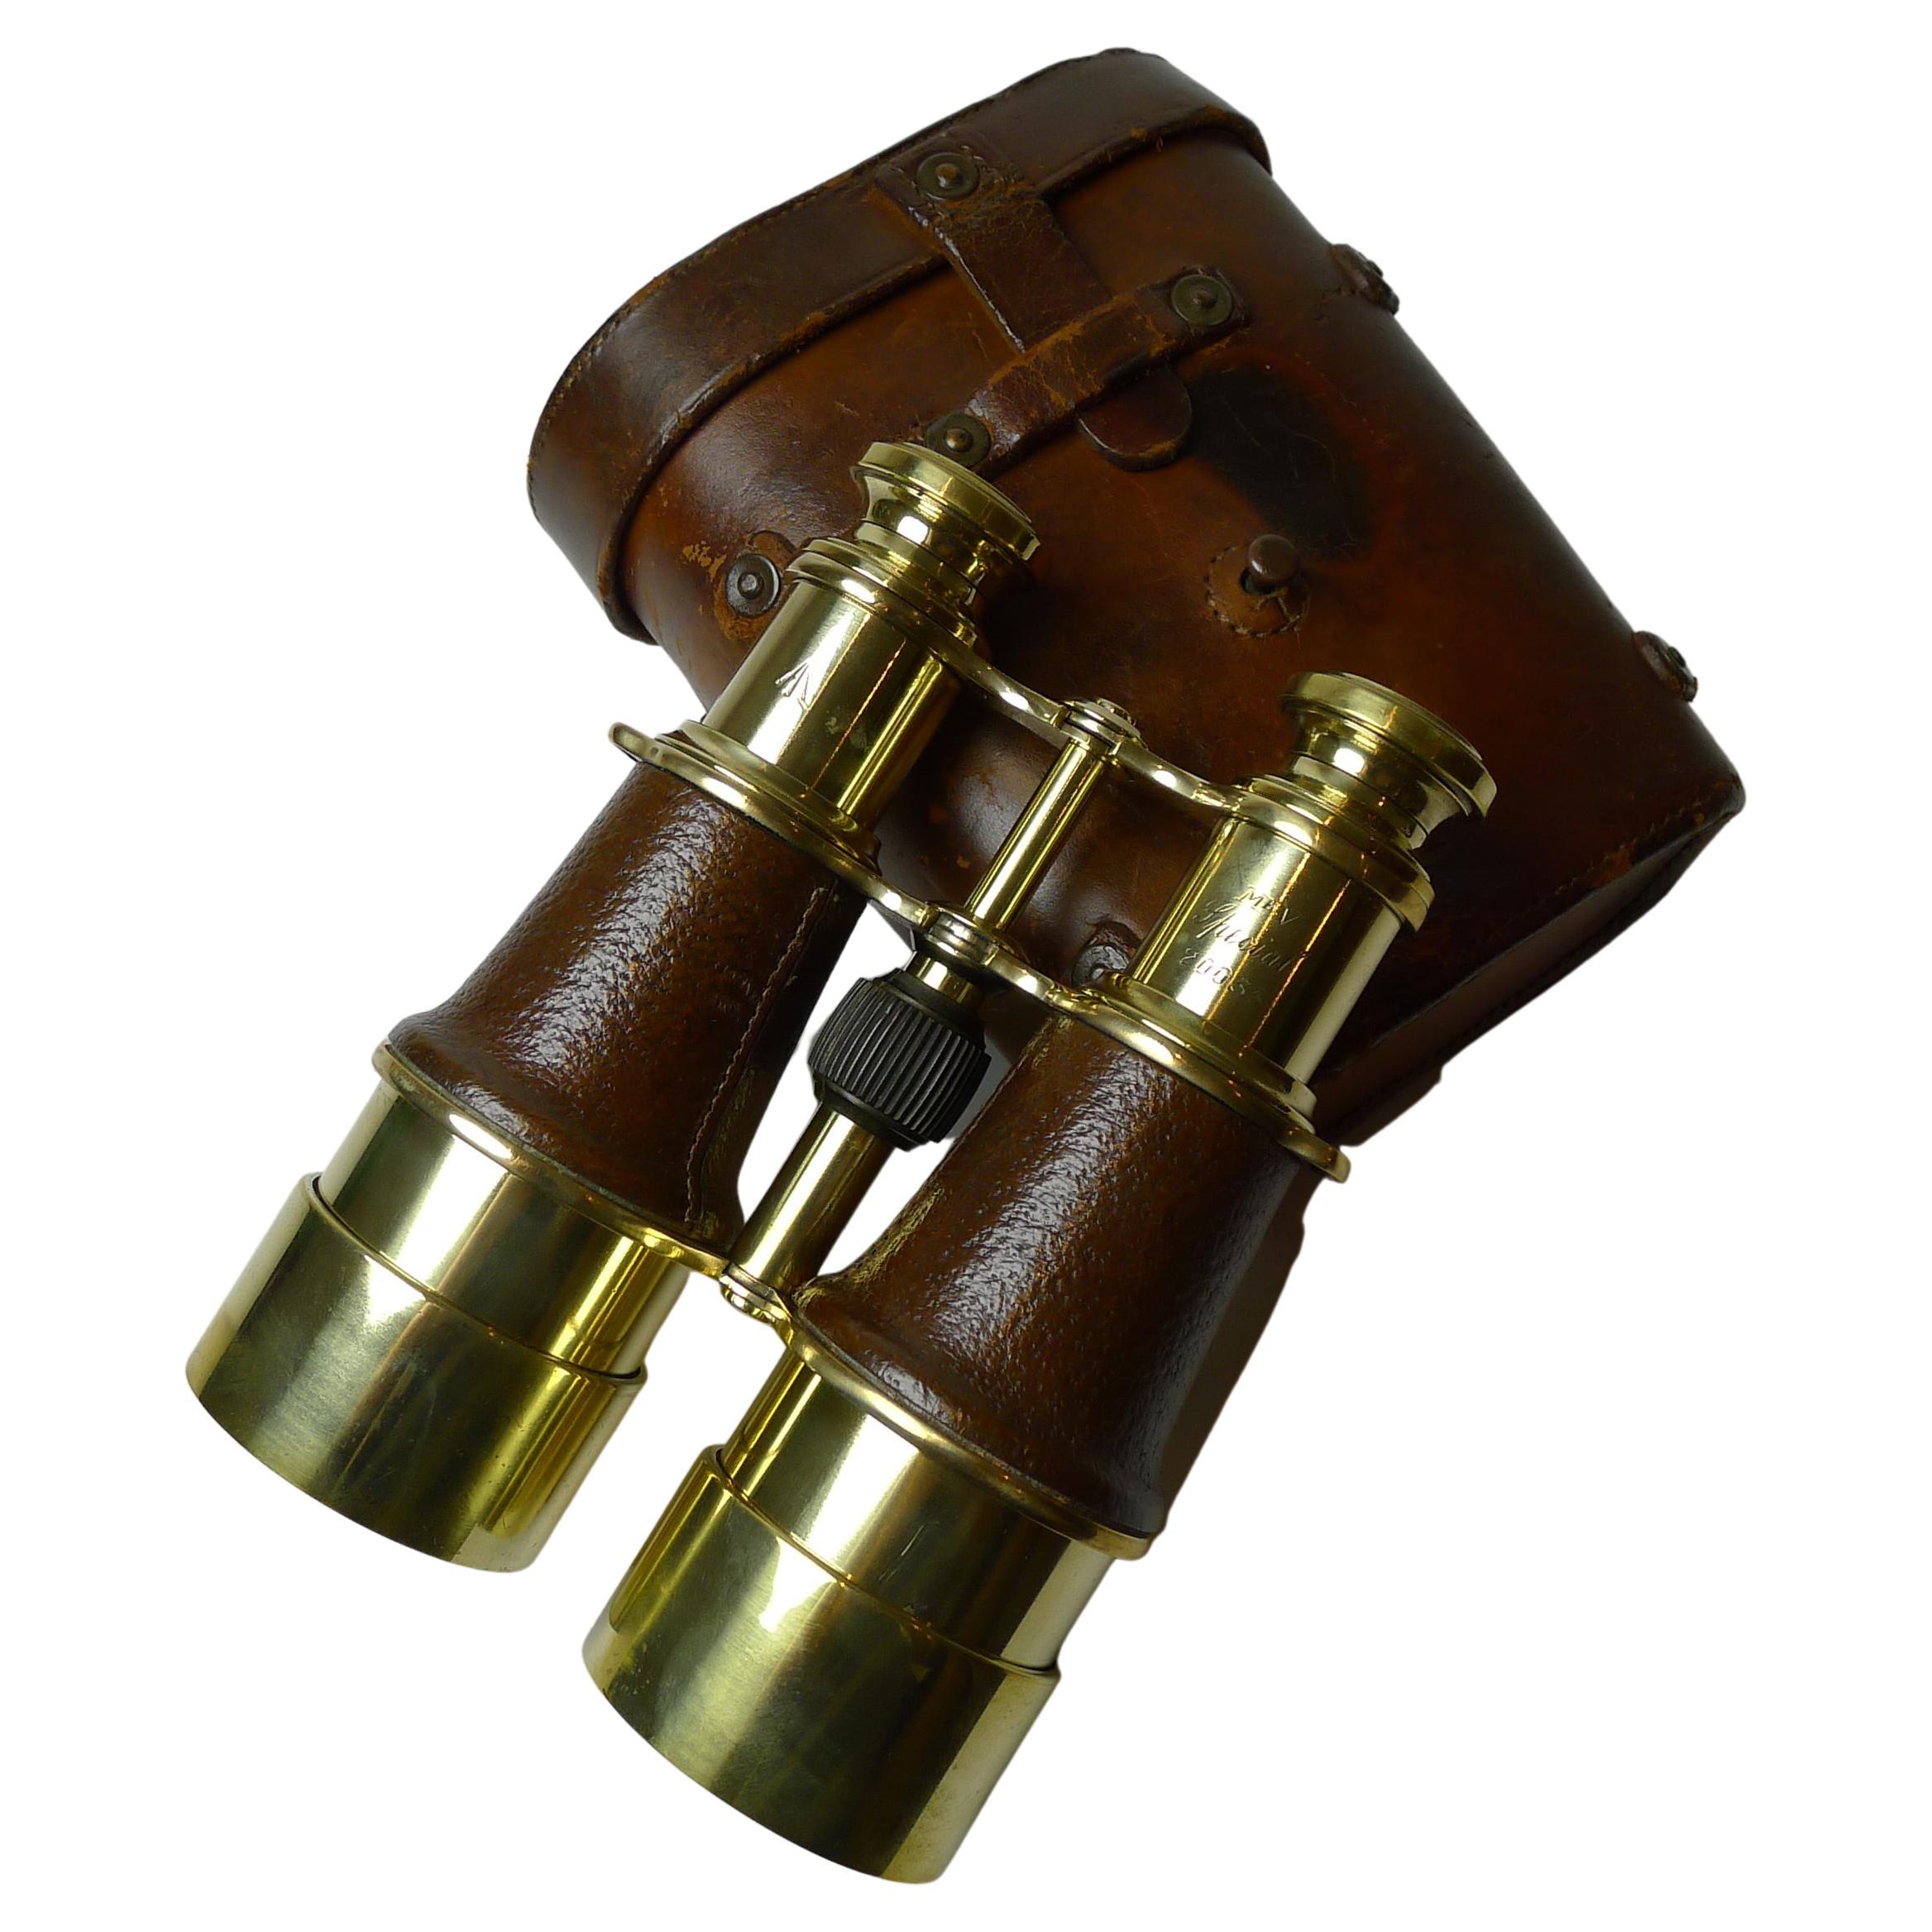 French Made WW1 Binoculars For British Military Issue c.1917